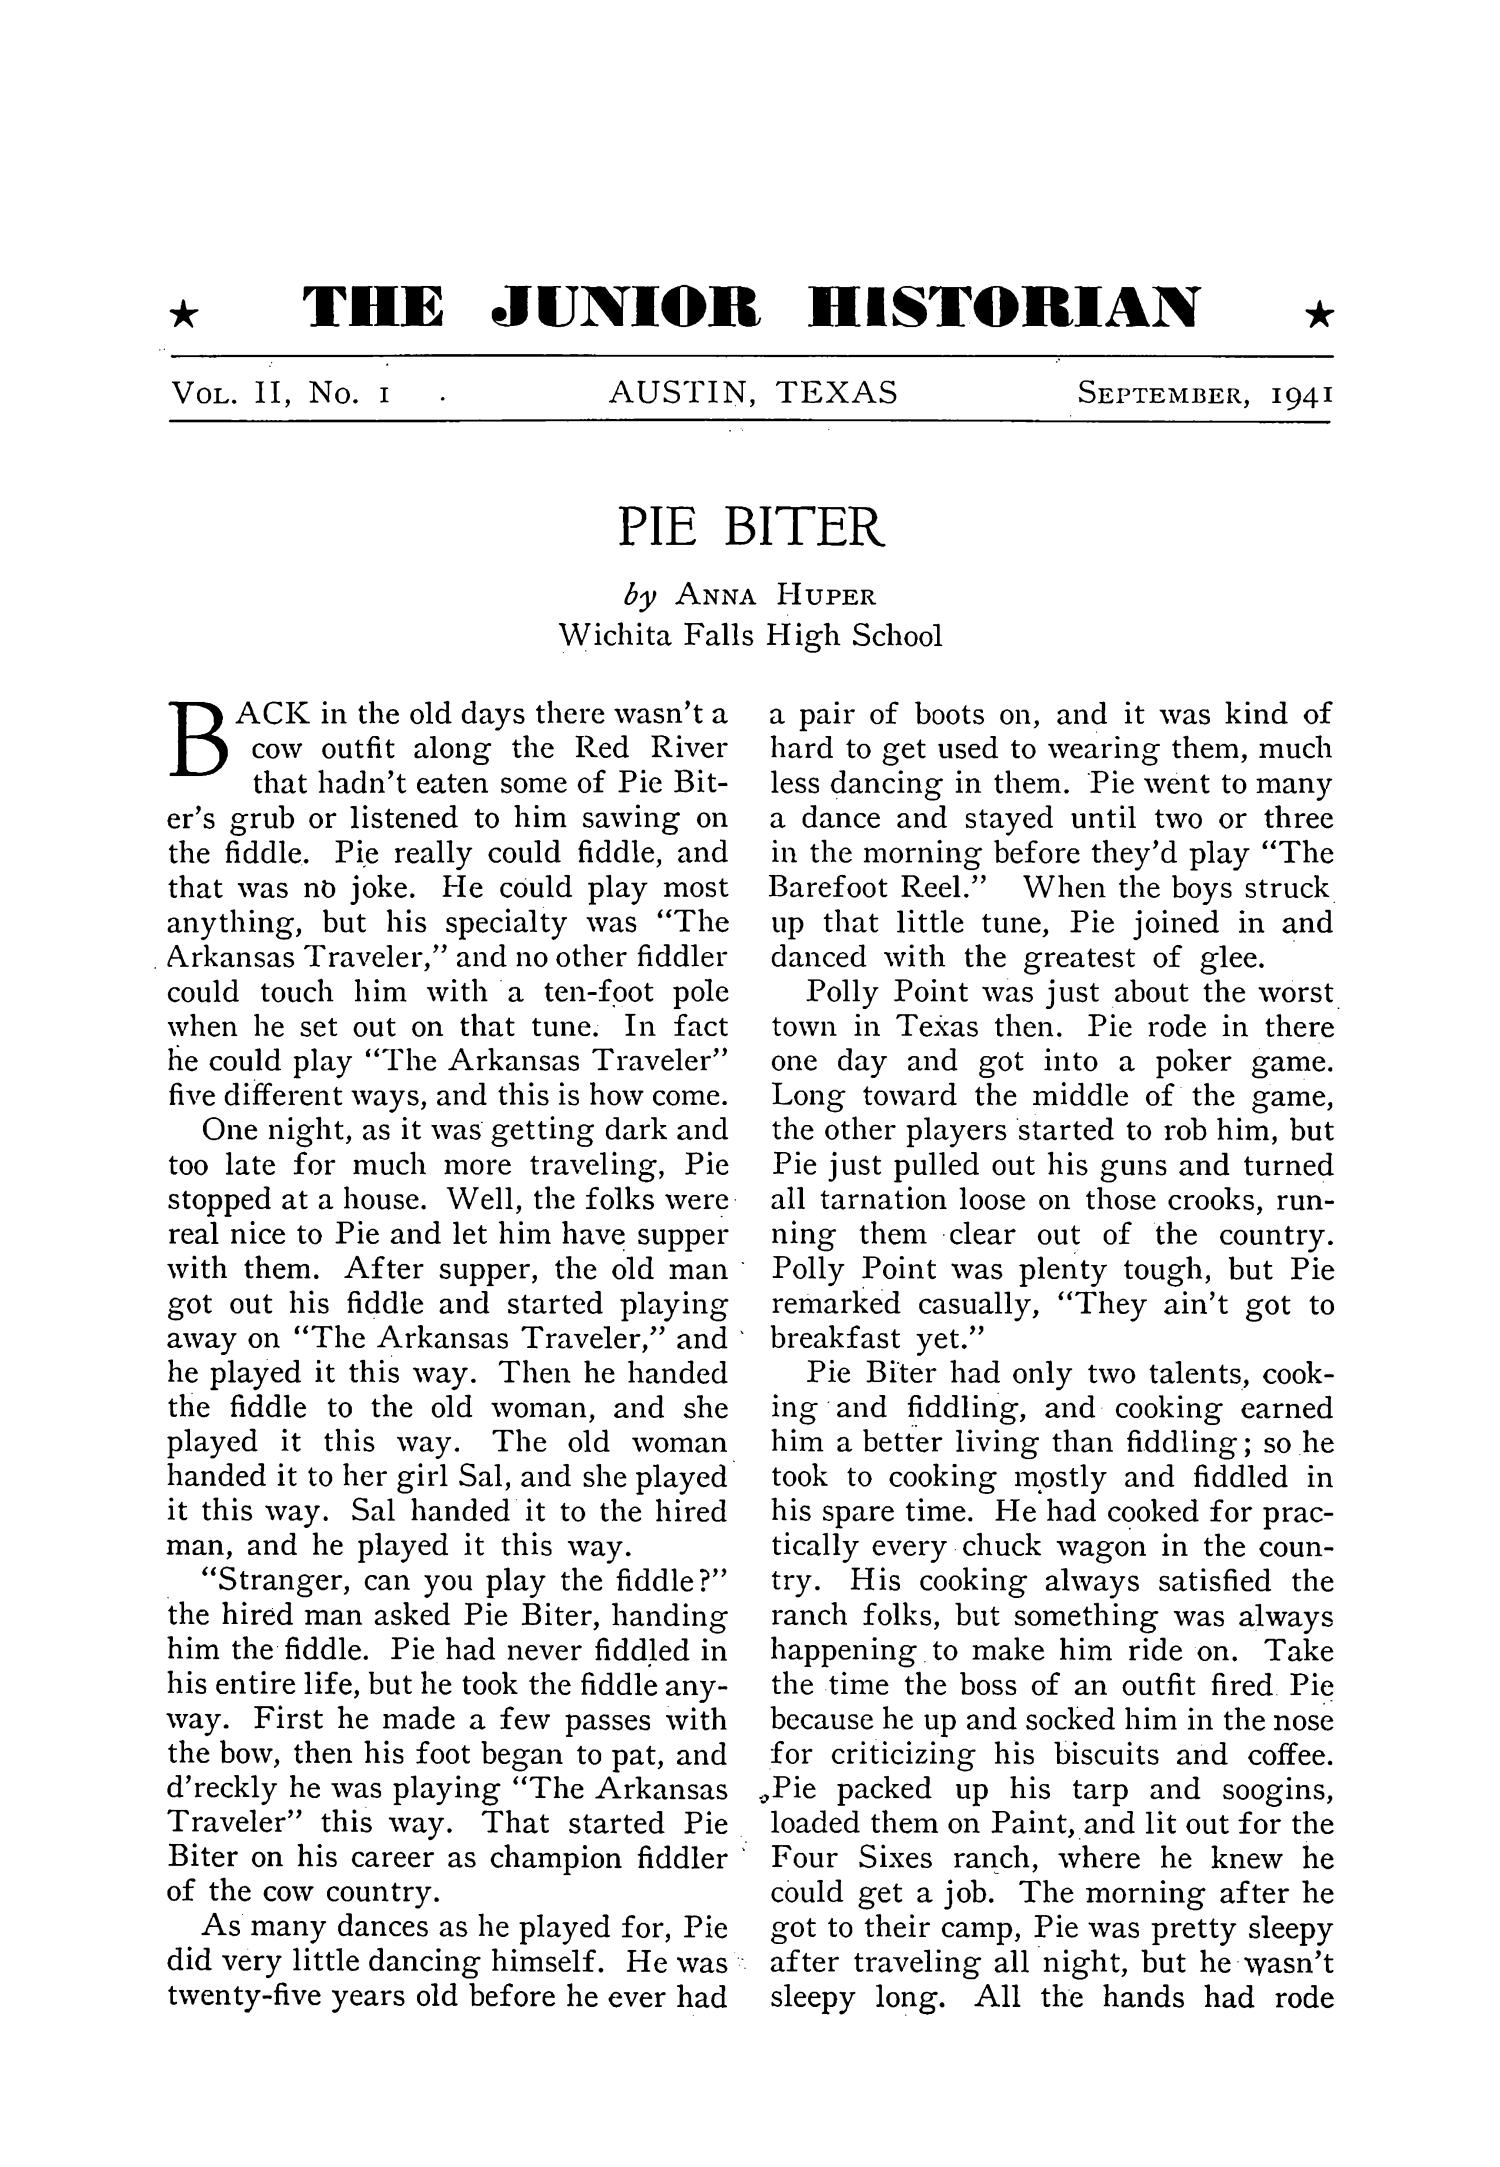 The Junior Historian, Volume 2, Number 1, September 1941
                                                
                                                    1
                                                